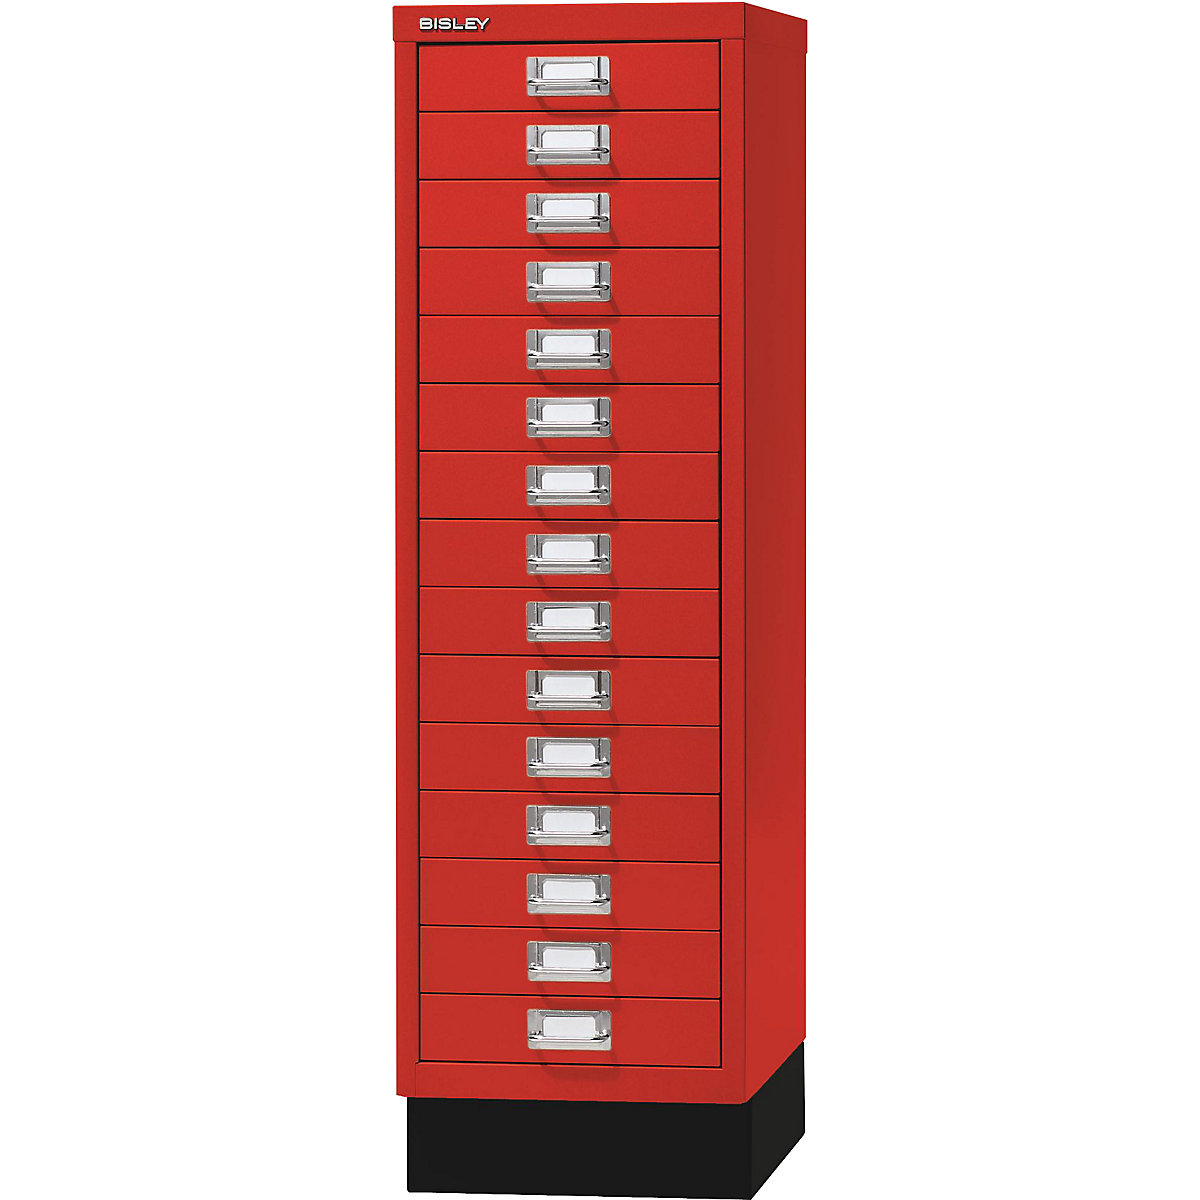 MultiDrawer™ série 39 – BISLEY, avec socle, format A4, 15 tiroirs, rouge cardinal, noir-5